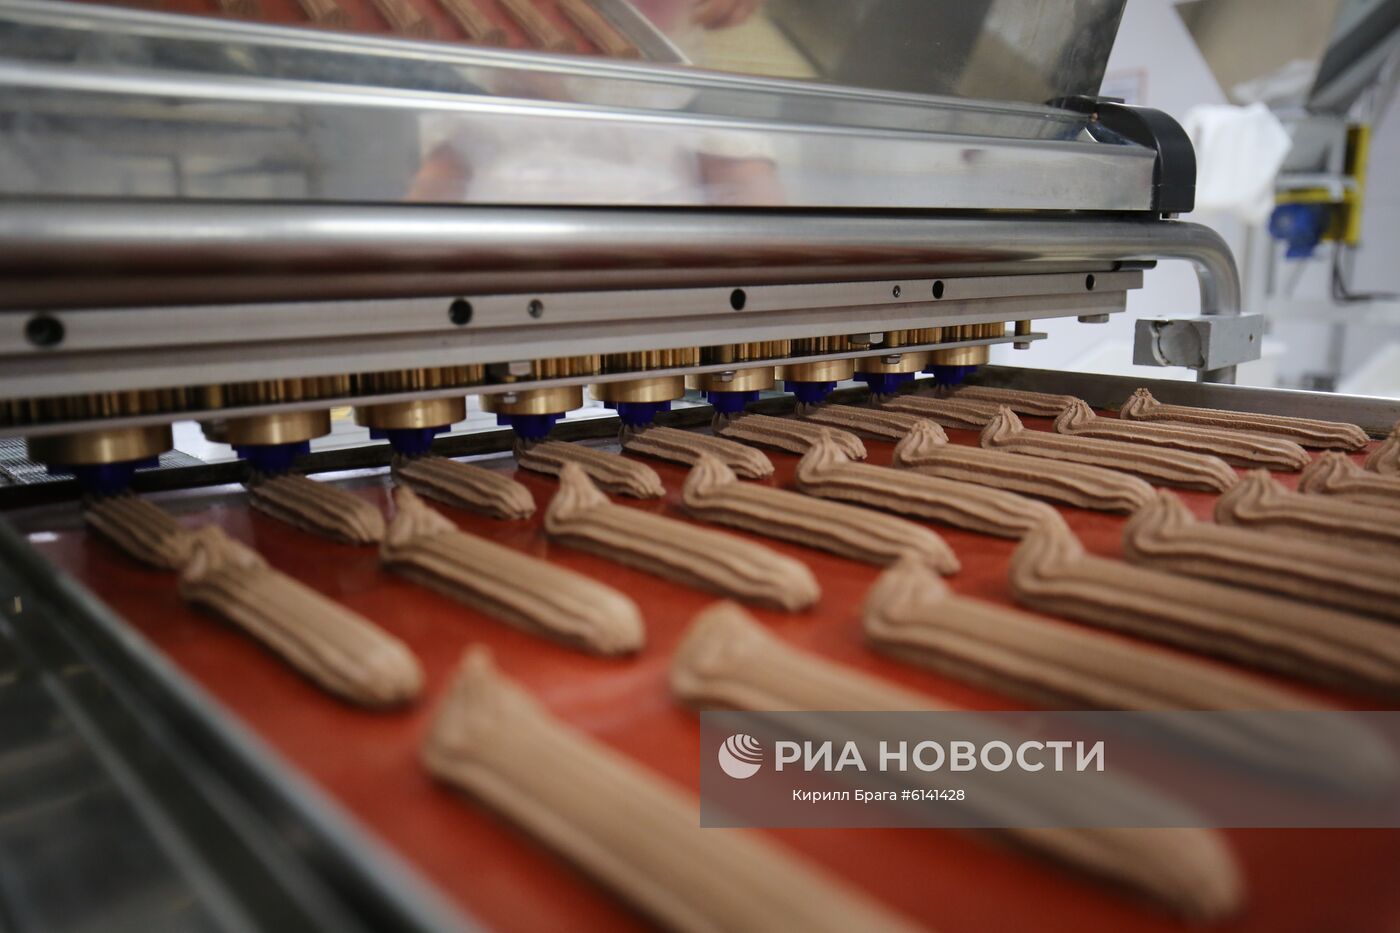 Производство компании "Виво Маркет" в Волгограде